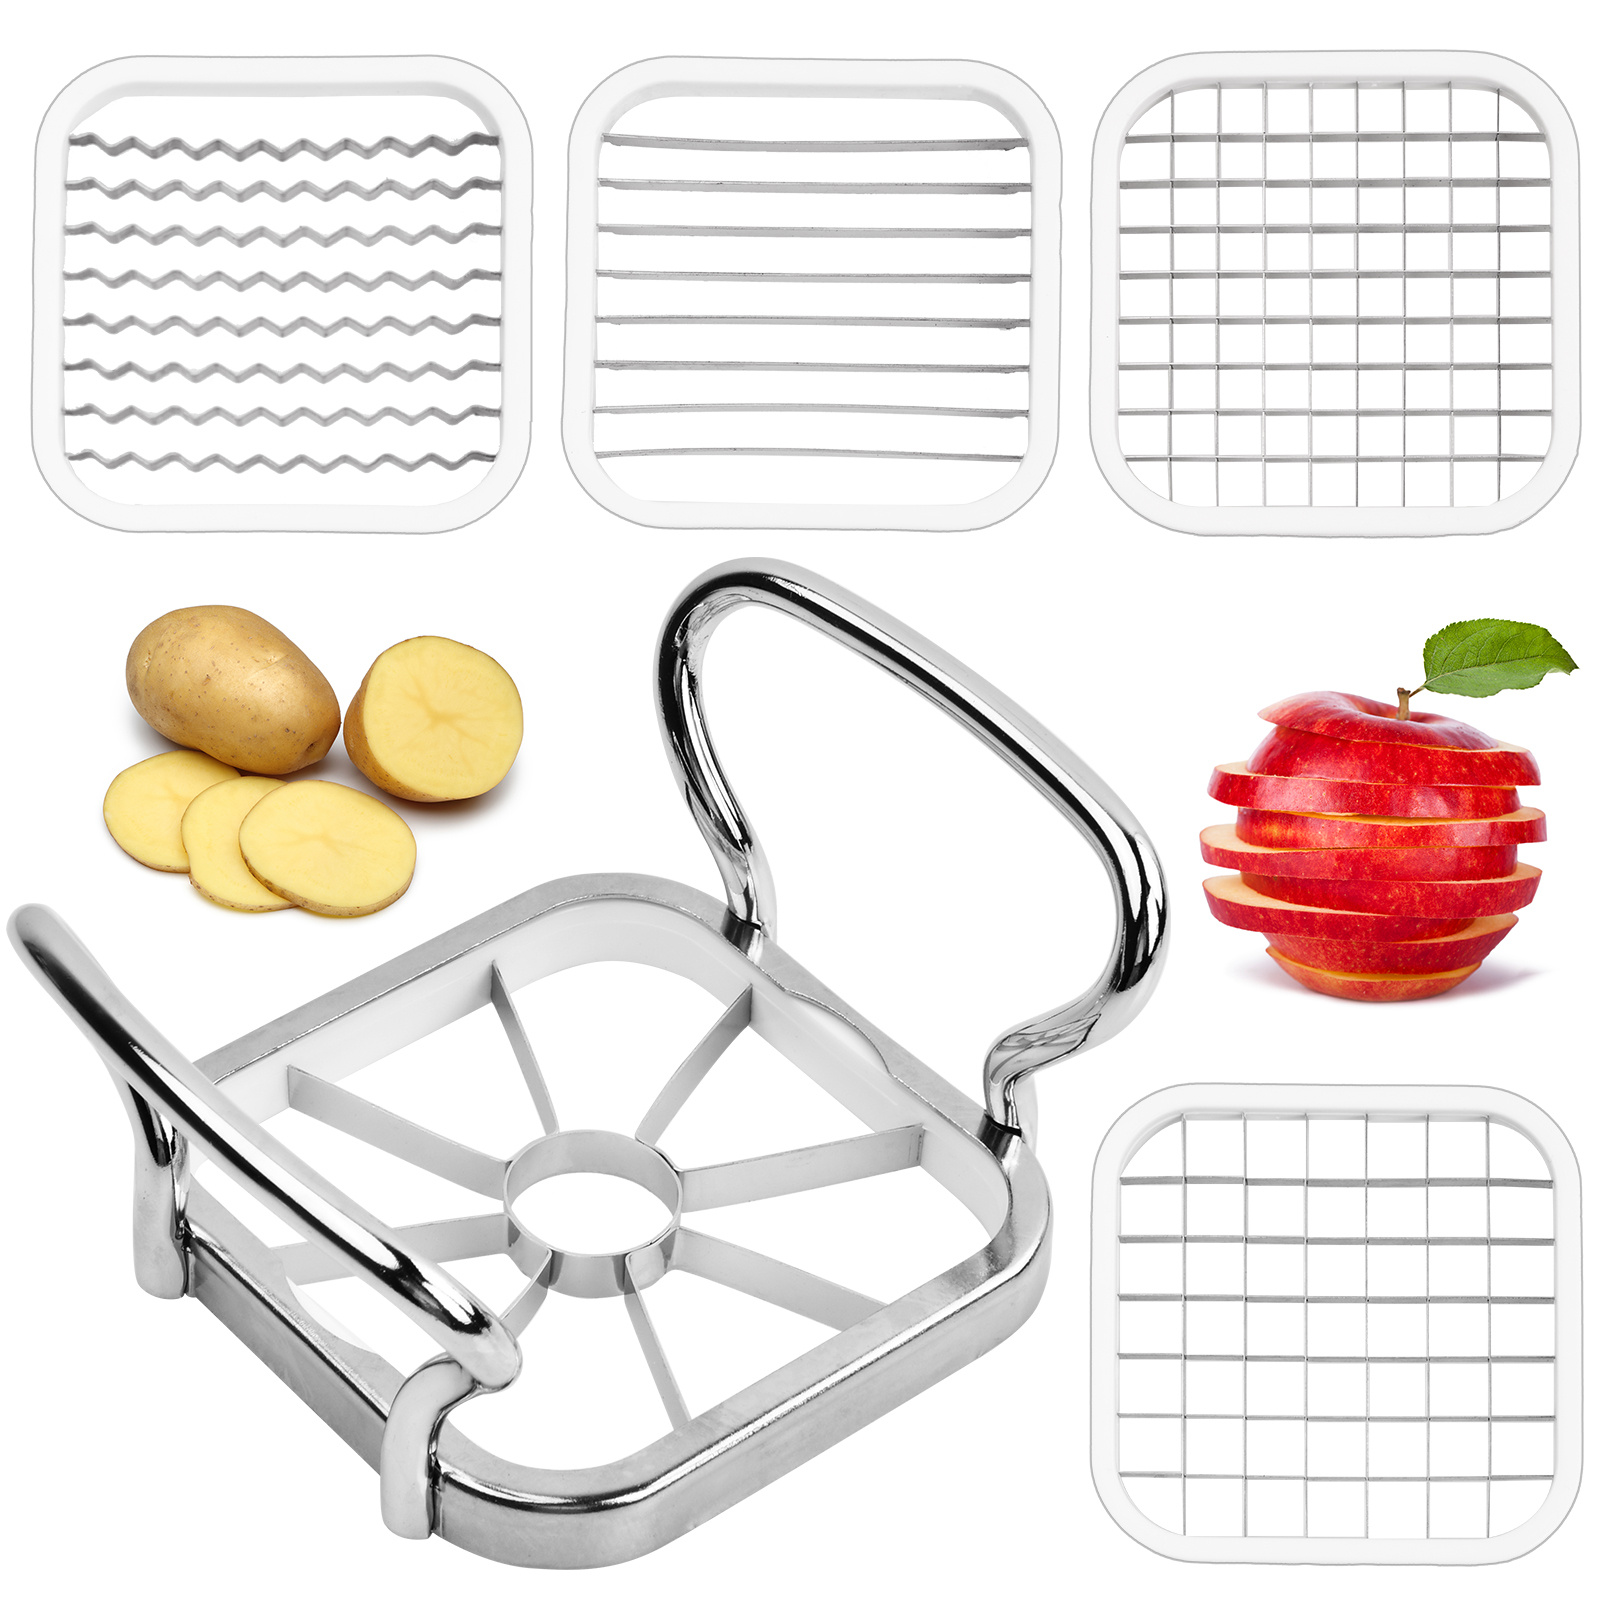 Potato Cutter Stainless Steel Nonslip Handle Manual Kitchen Gadget